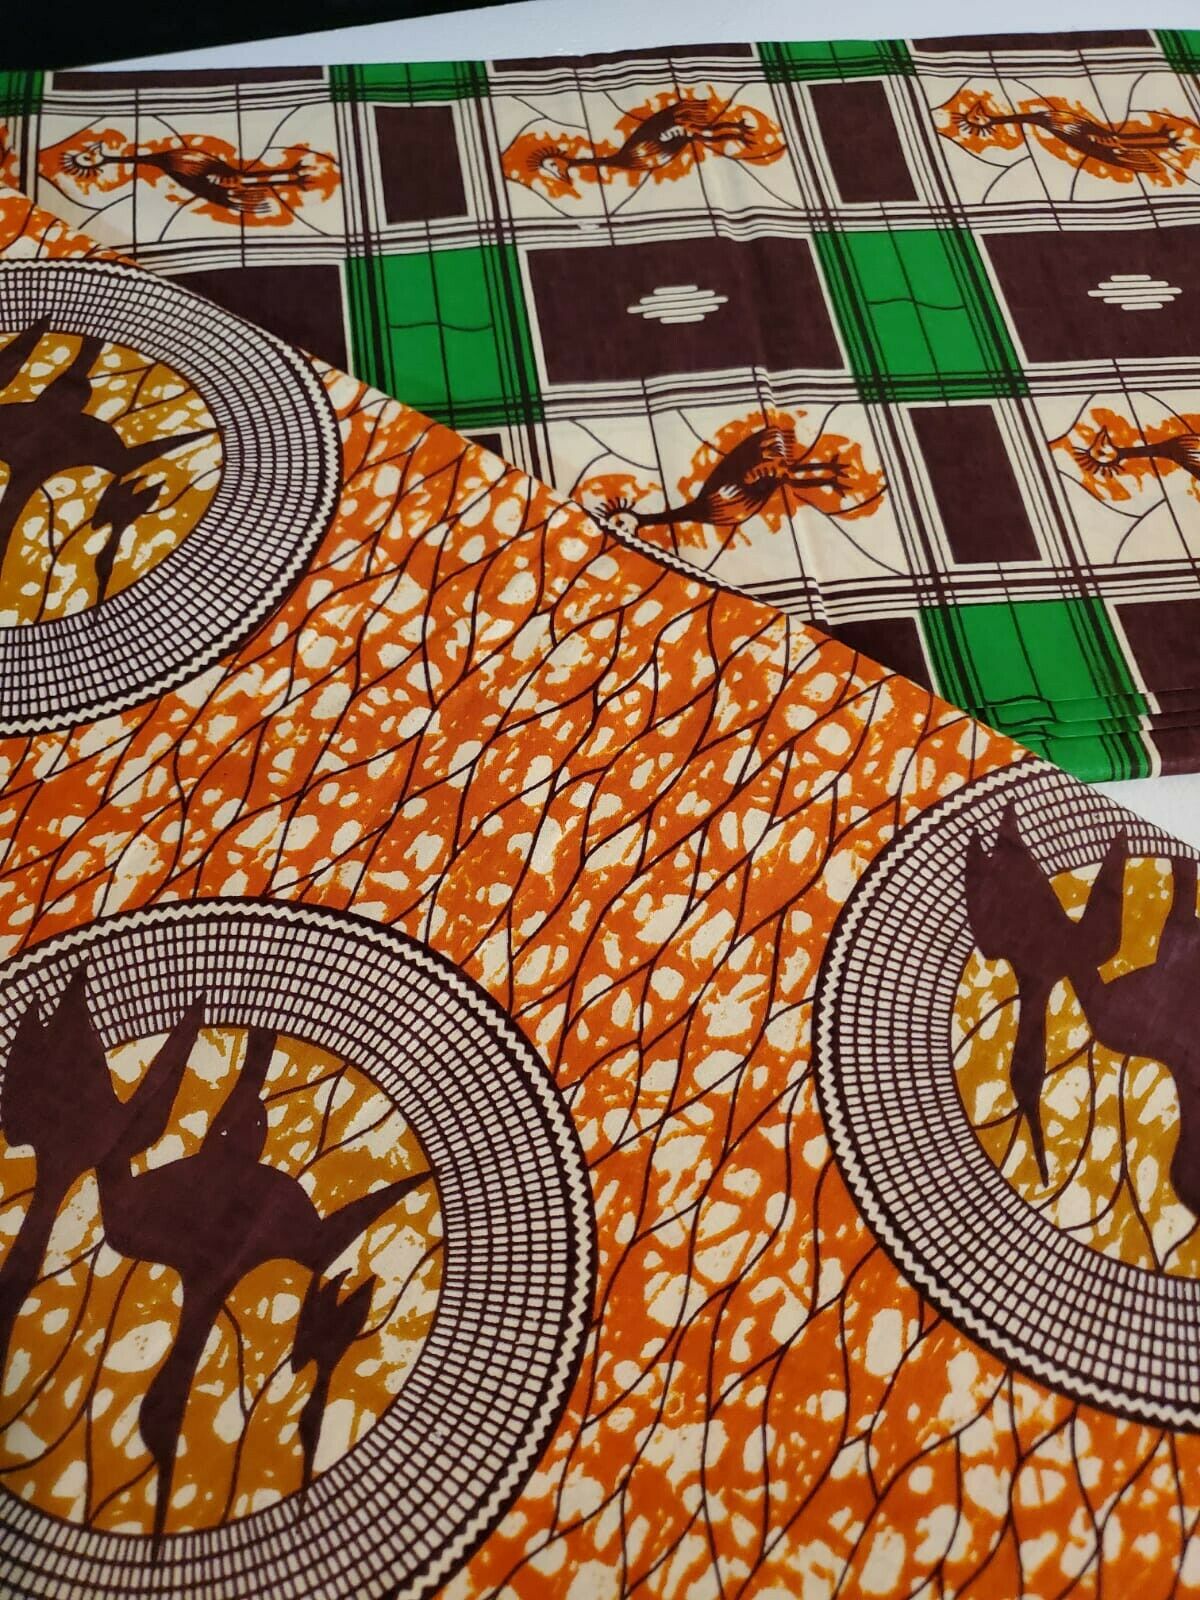 Green MultiAfrican Print(birds) 100% Cotton Fabric ~6yards×46"~$32 SALE $25!!!!